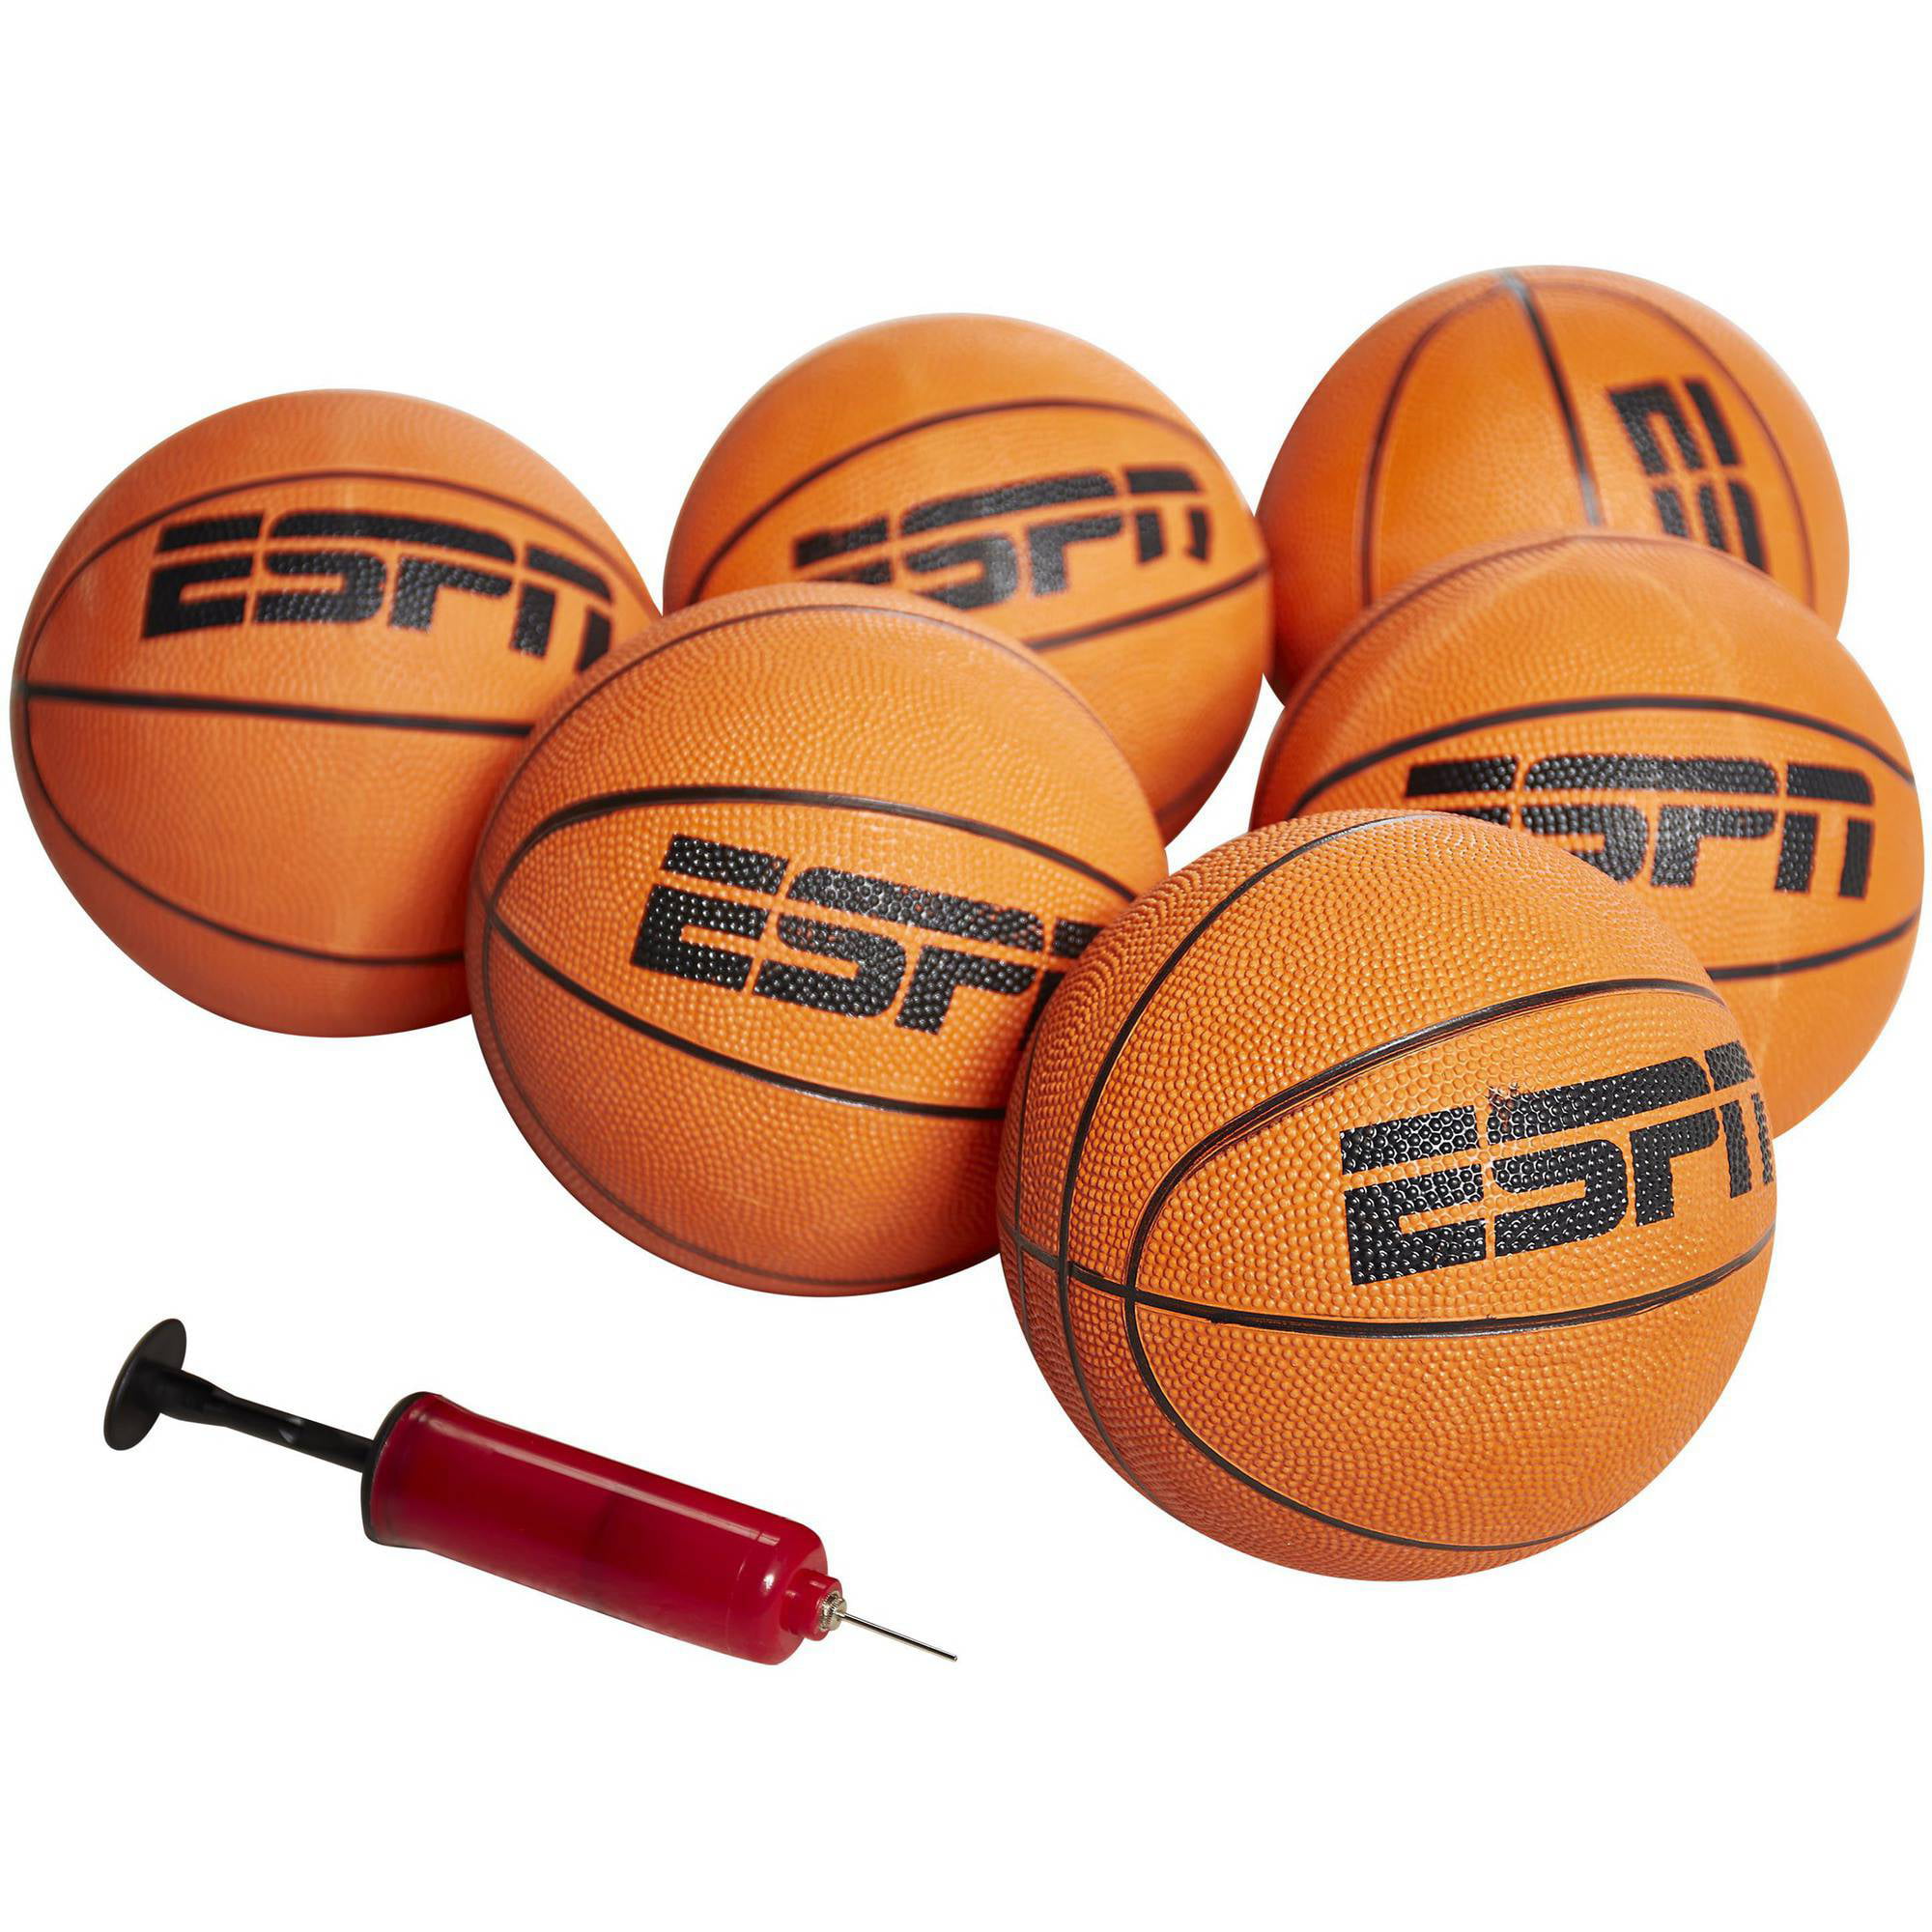 ESPN 3 Player Arcade Basketball Game with LED Scorer - Walmart.com